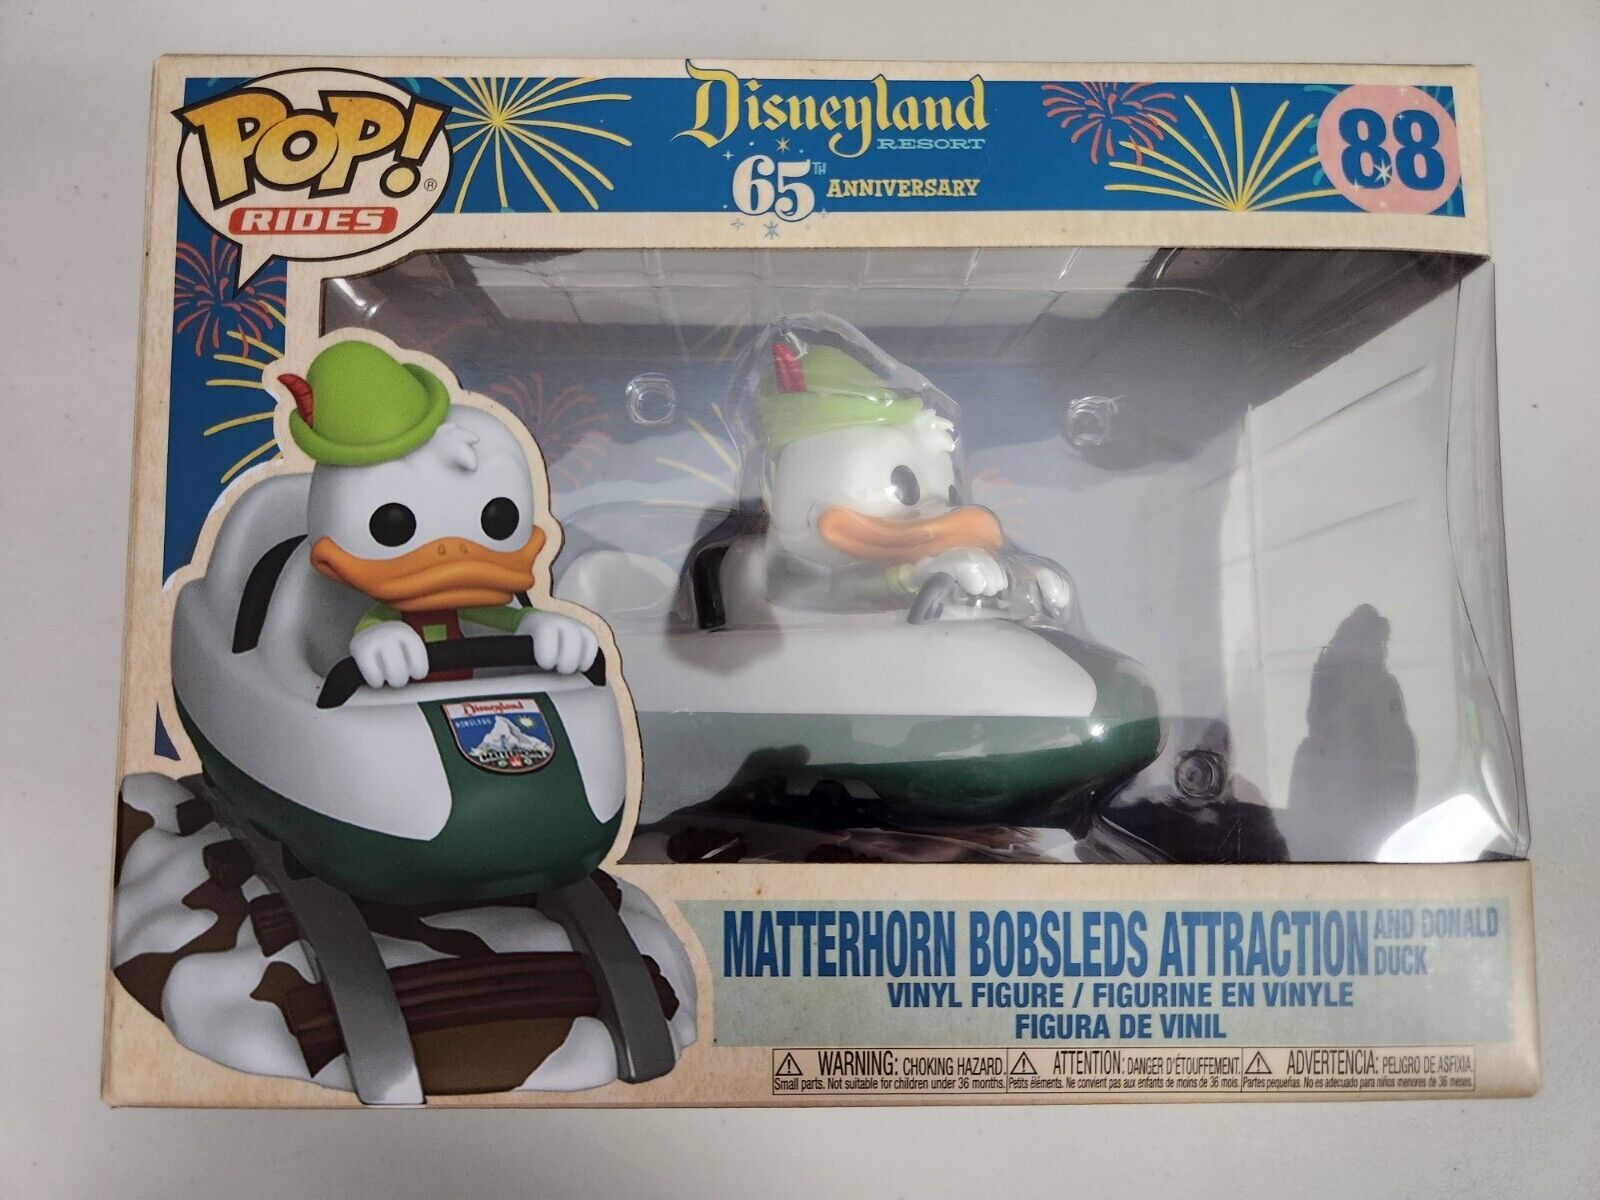 Funko Pop Rides Disneyland Matterhorn Bobsleds Attraction Donald Duck #88 Figure